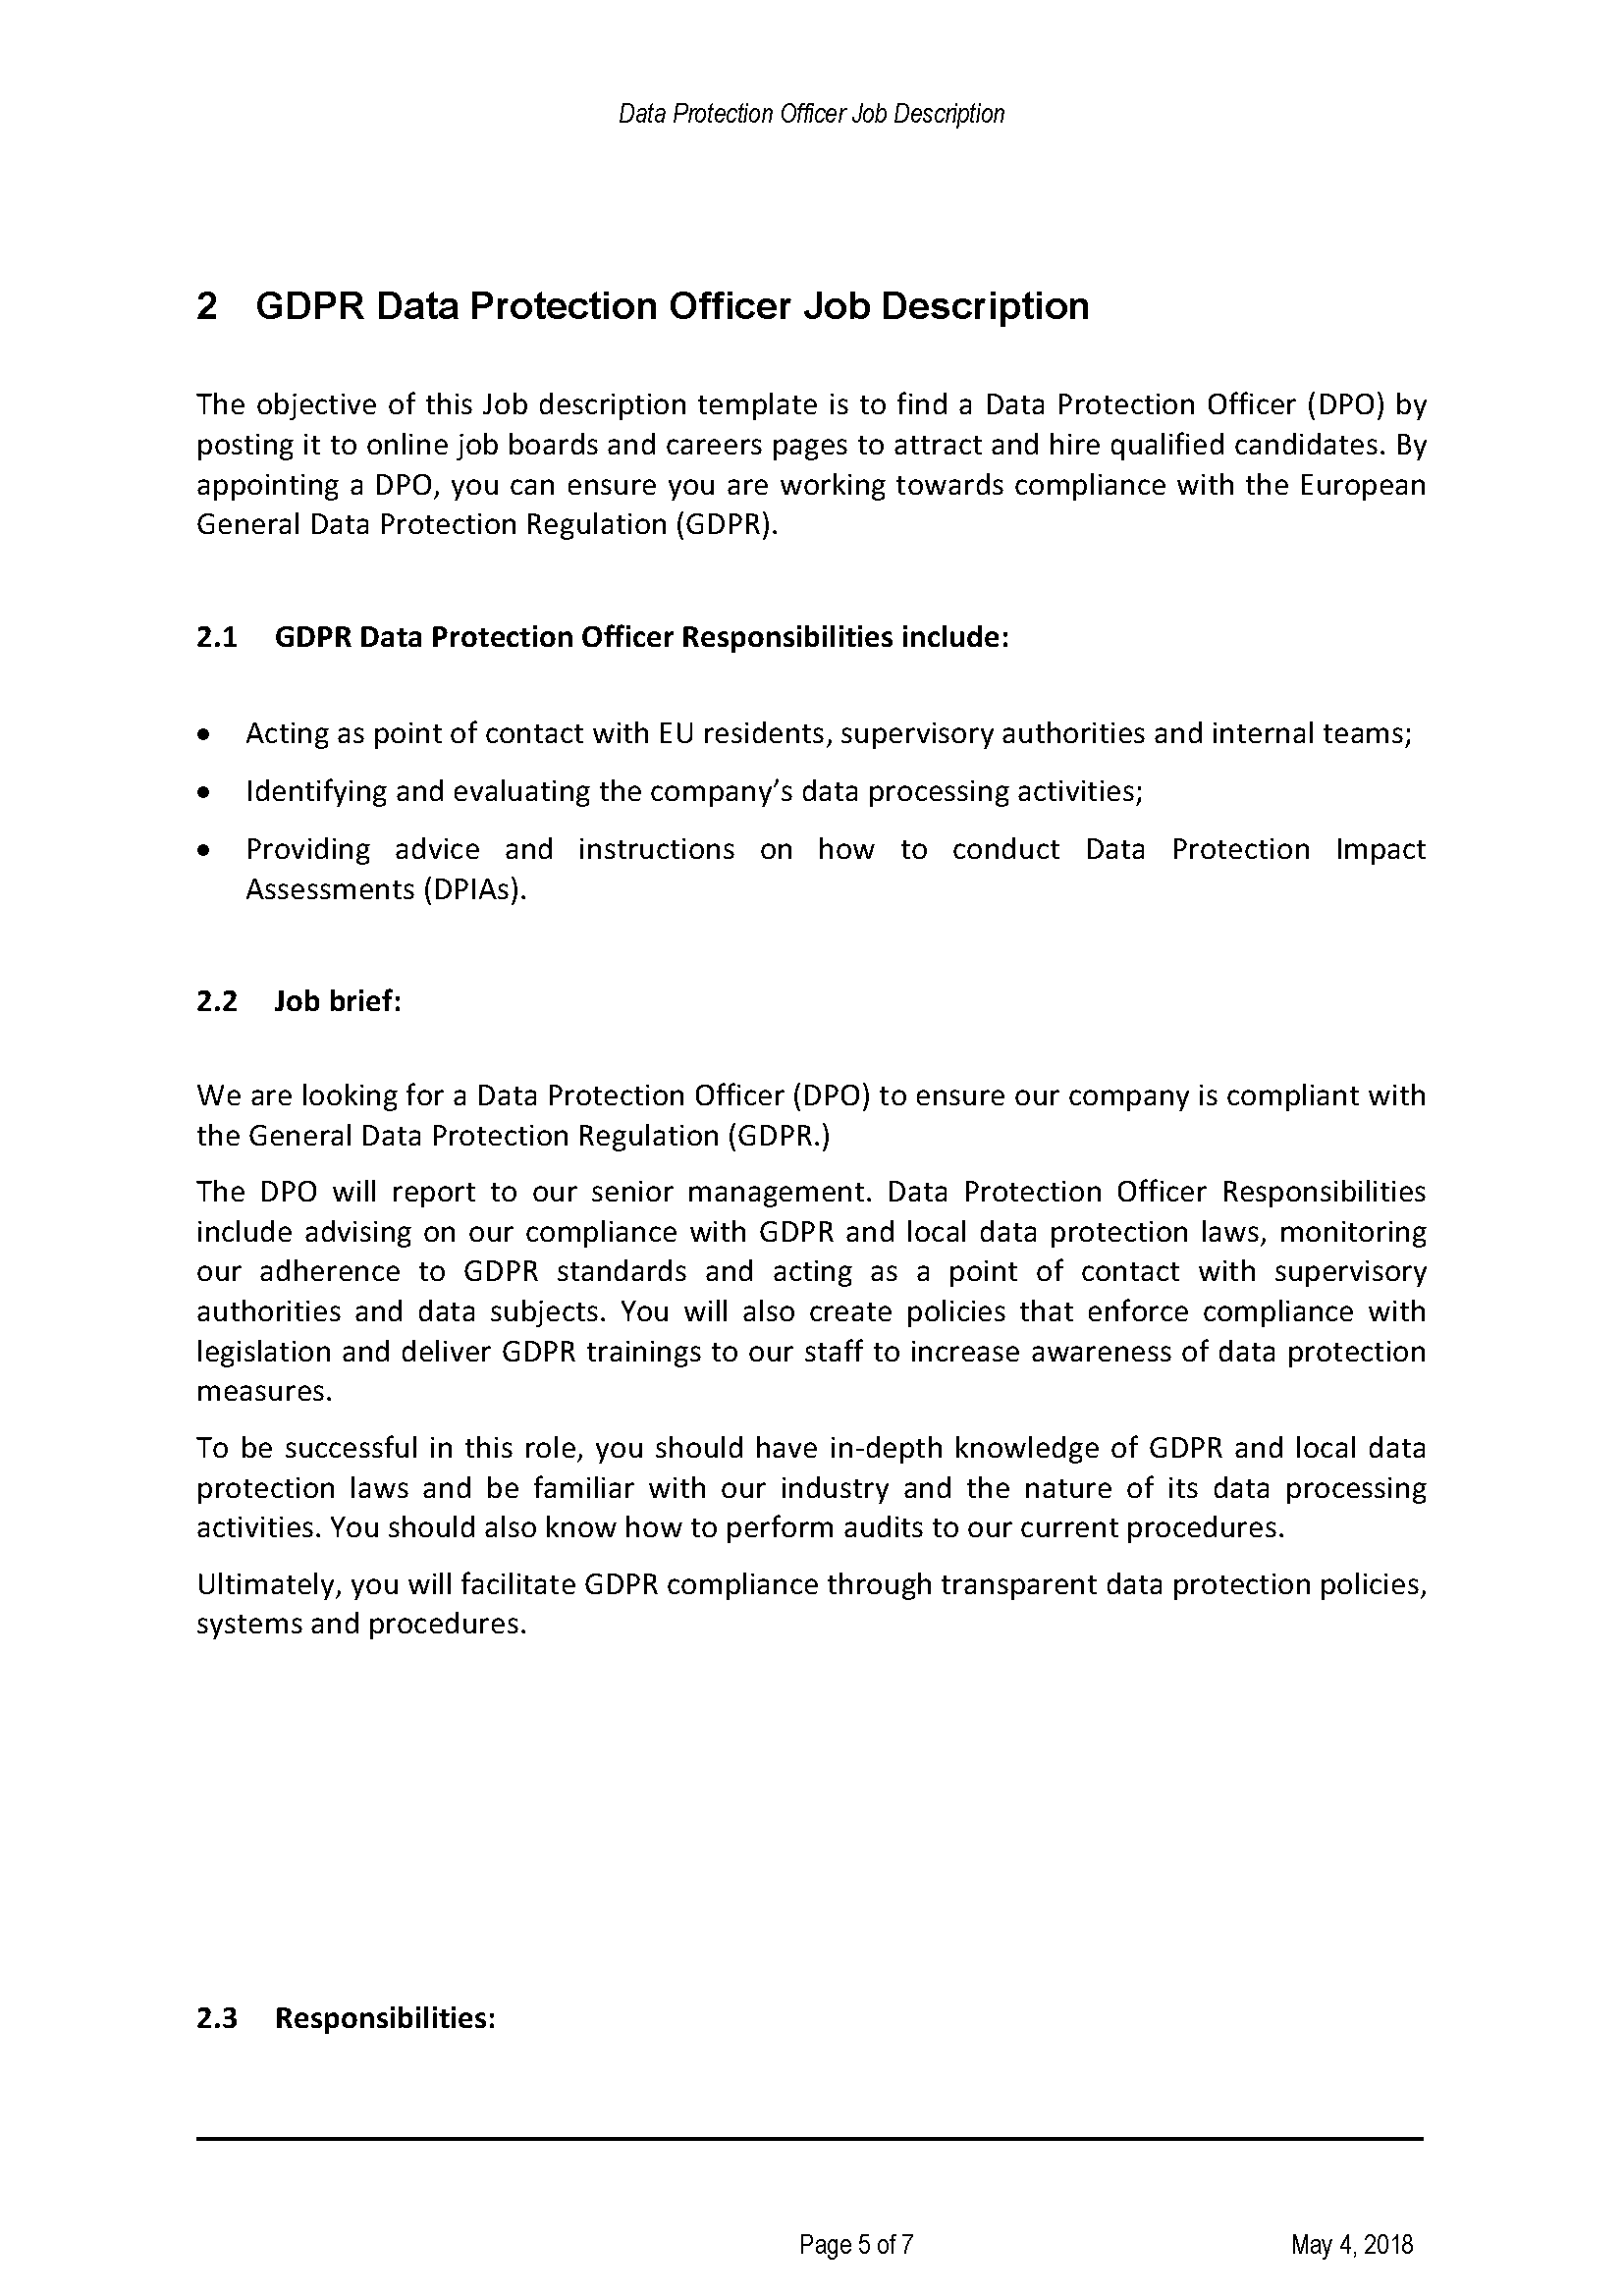 gdpr data protection officer job description plantilla imagen principal